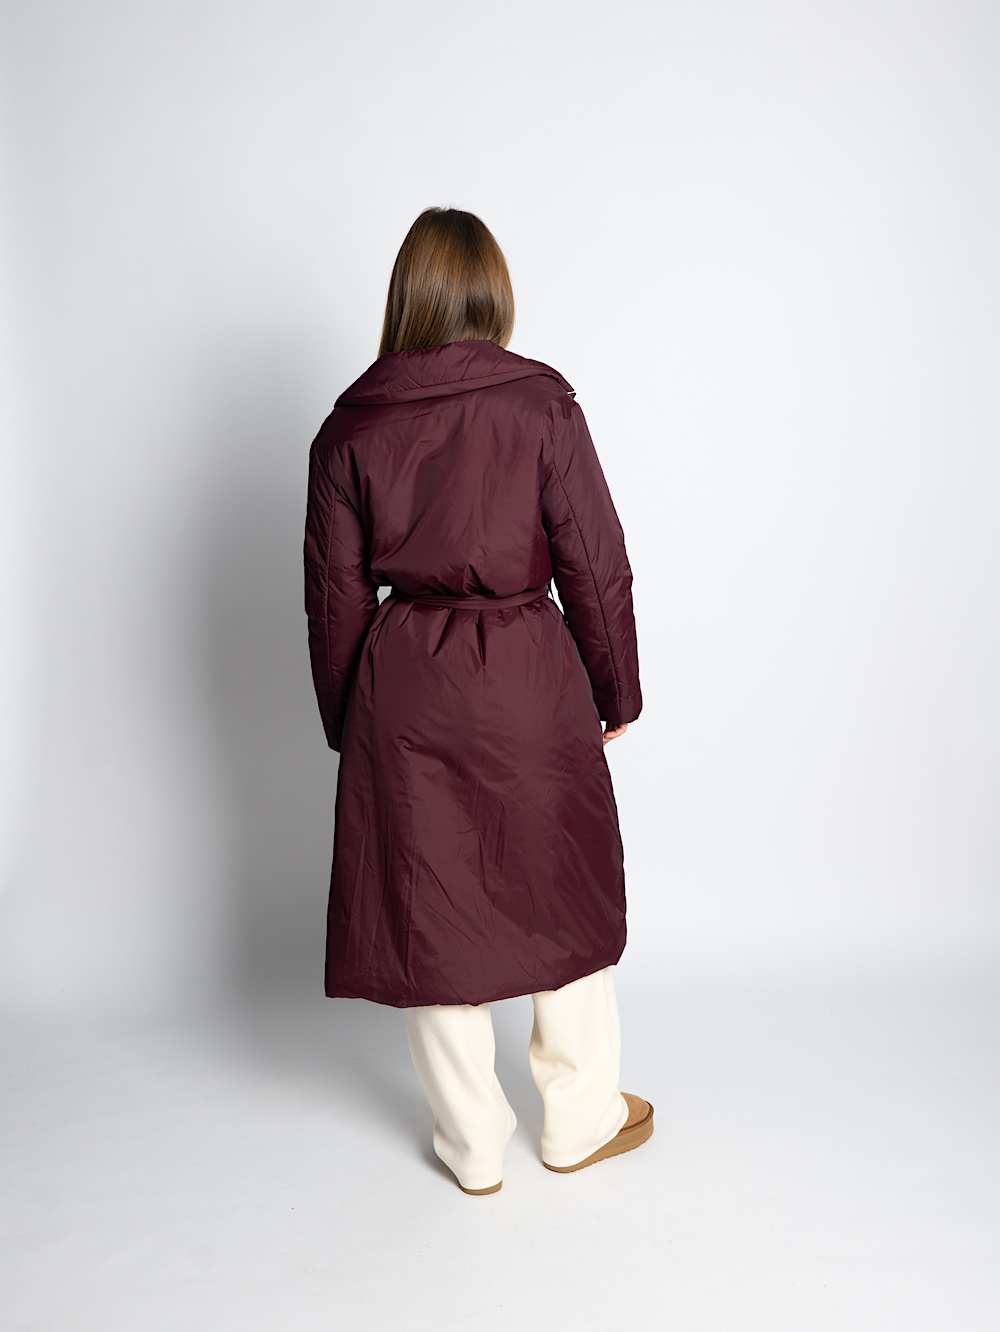 Довге пальто з кишенями на запах італійського бренду Imperial